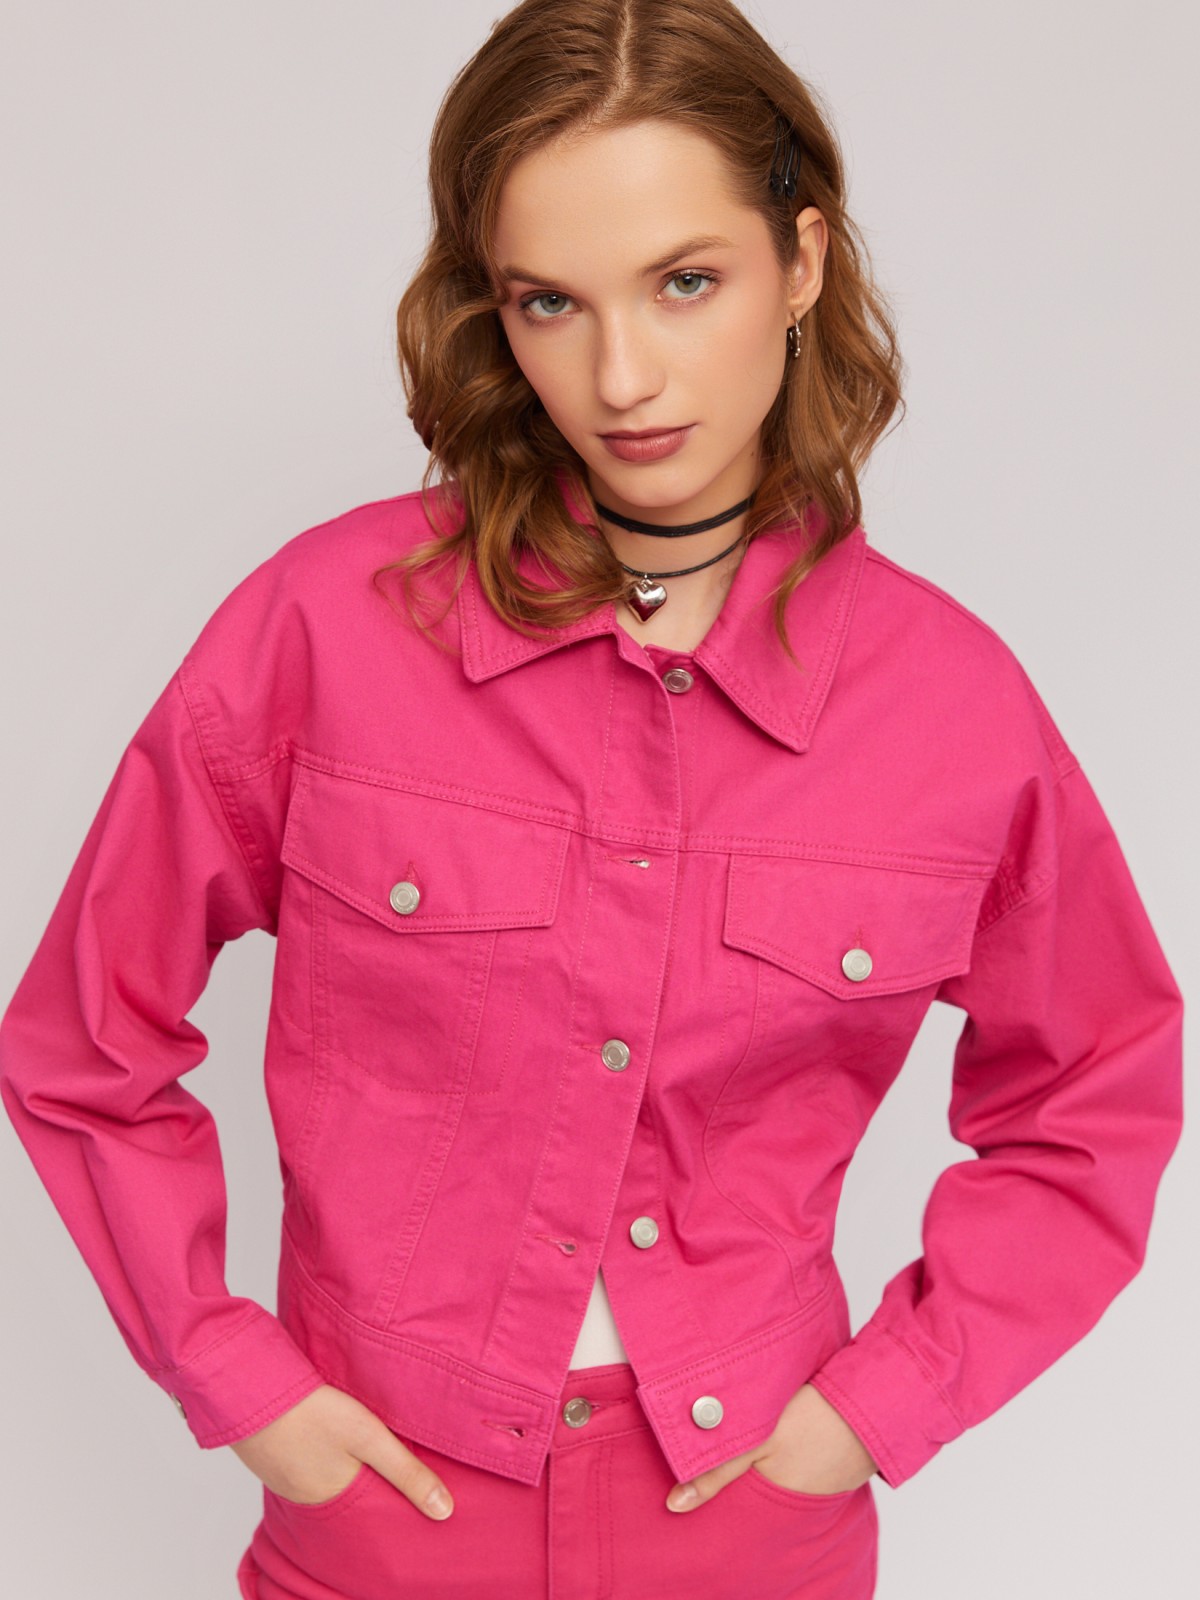 Укороченная куртка-рубашка из хлопка zolla 02423547Z013, цвет фуксия, размер XS